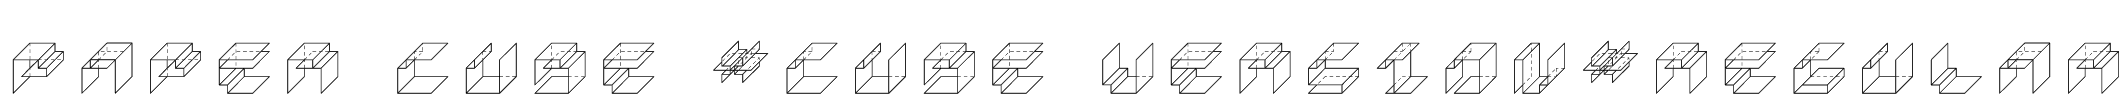 Paper Cube *cube version*Regular Font